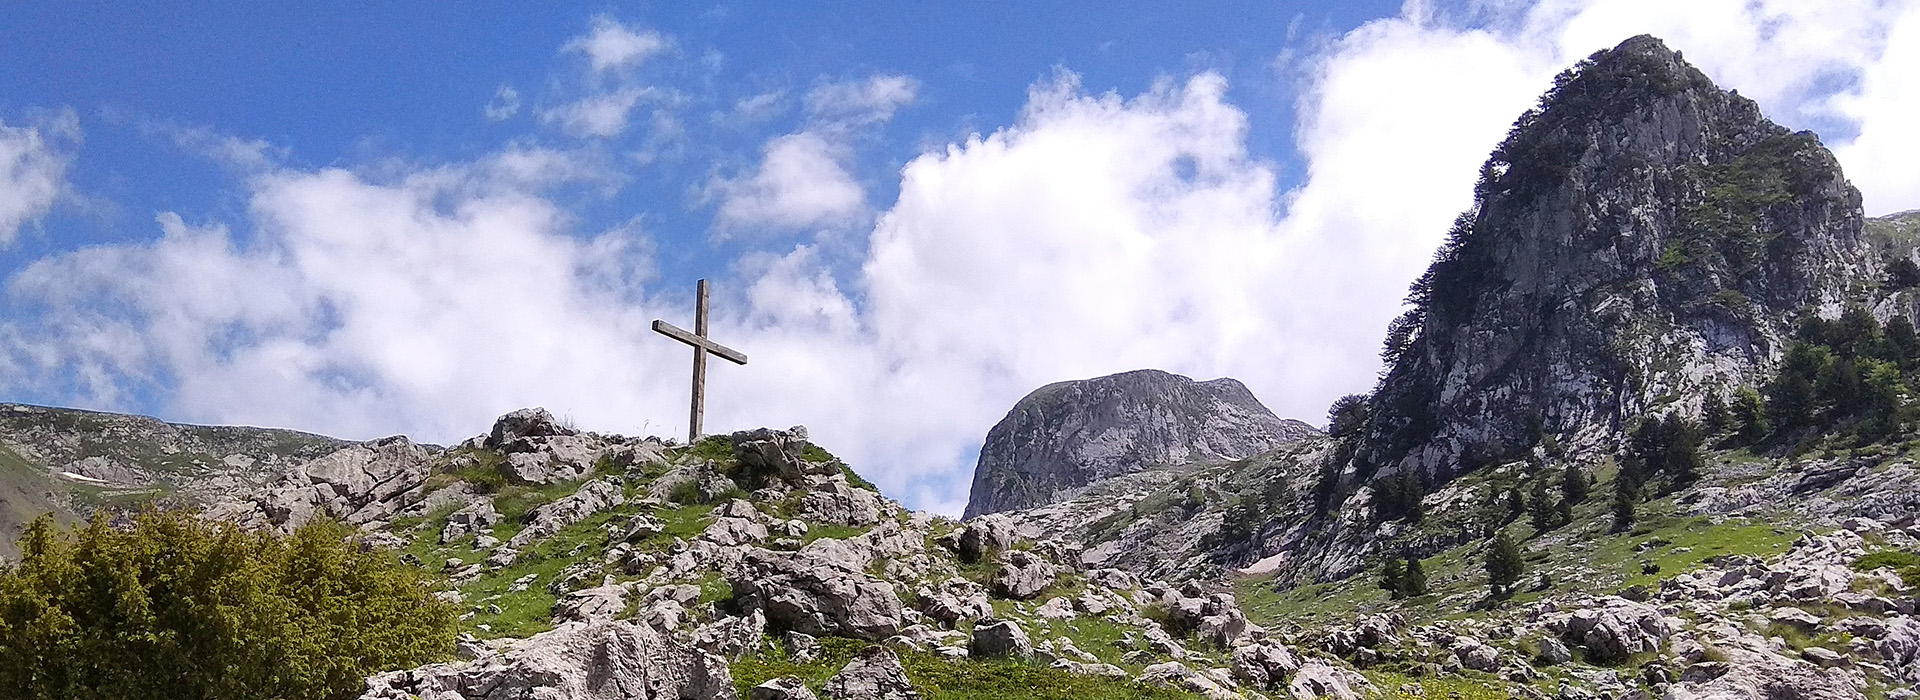 The Peaks of the Balkans walking guided holiday - Hiking Lepushe - Nikc